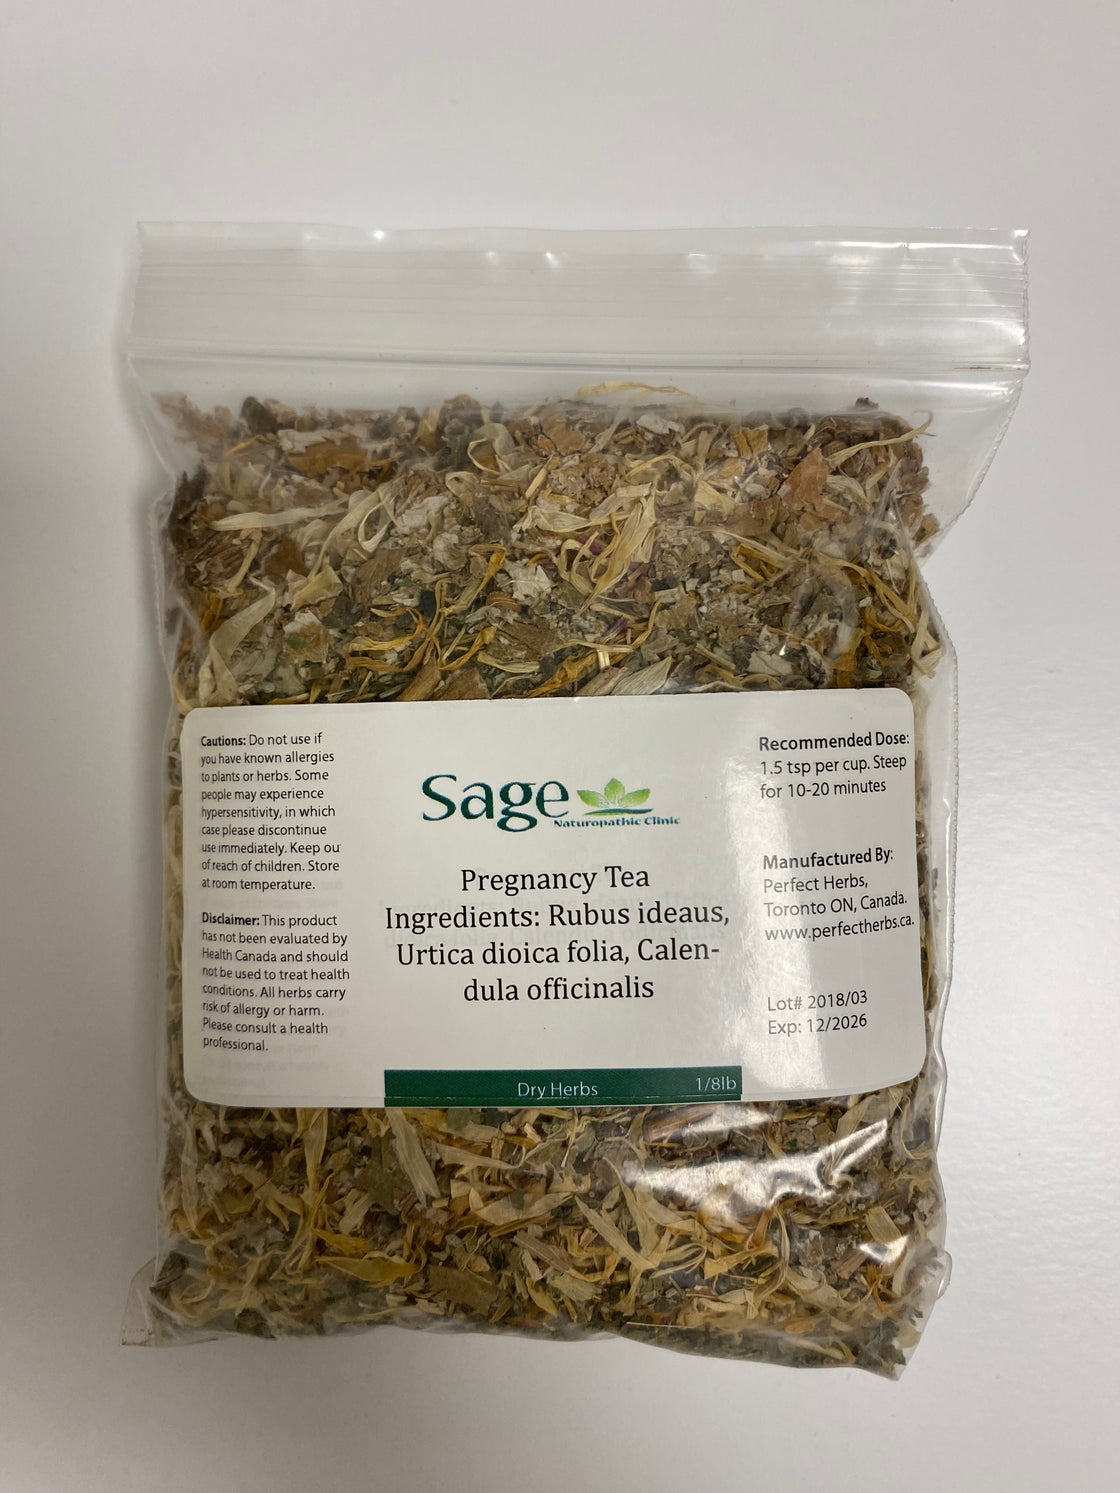 Sage's Pregnancy Tea